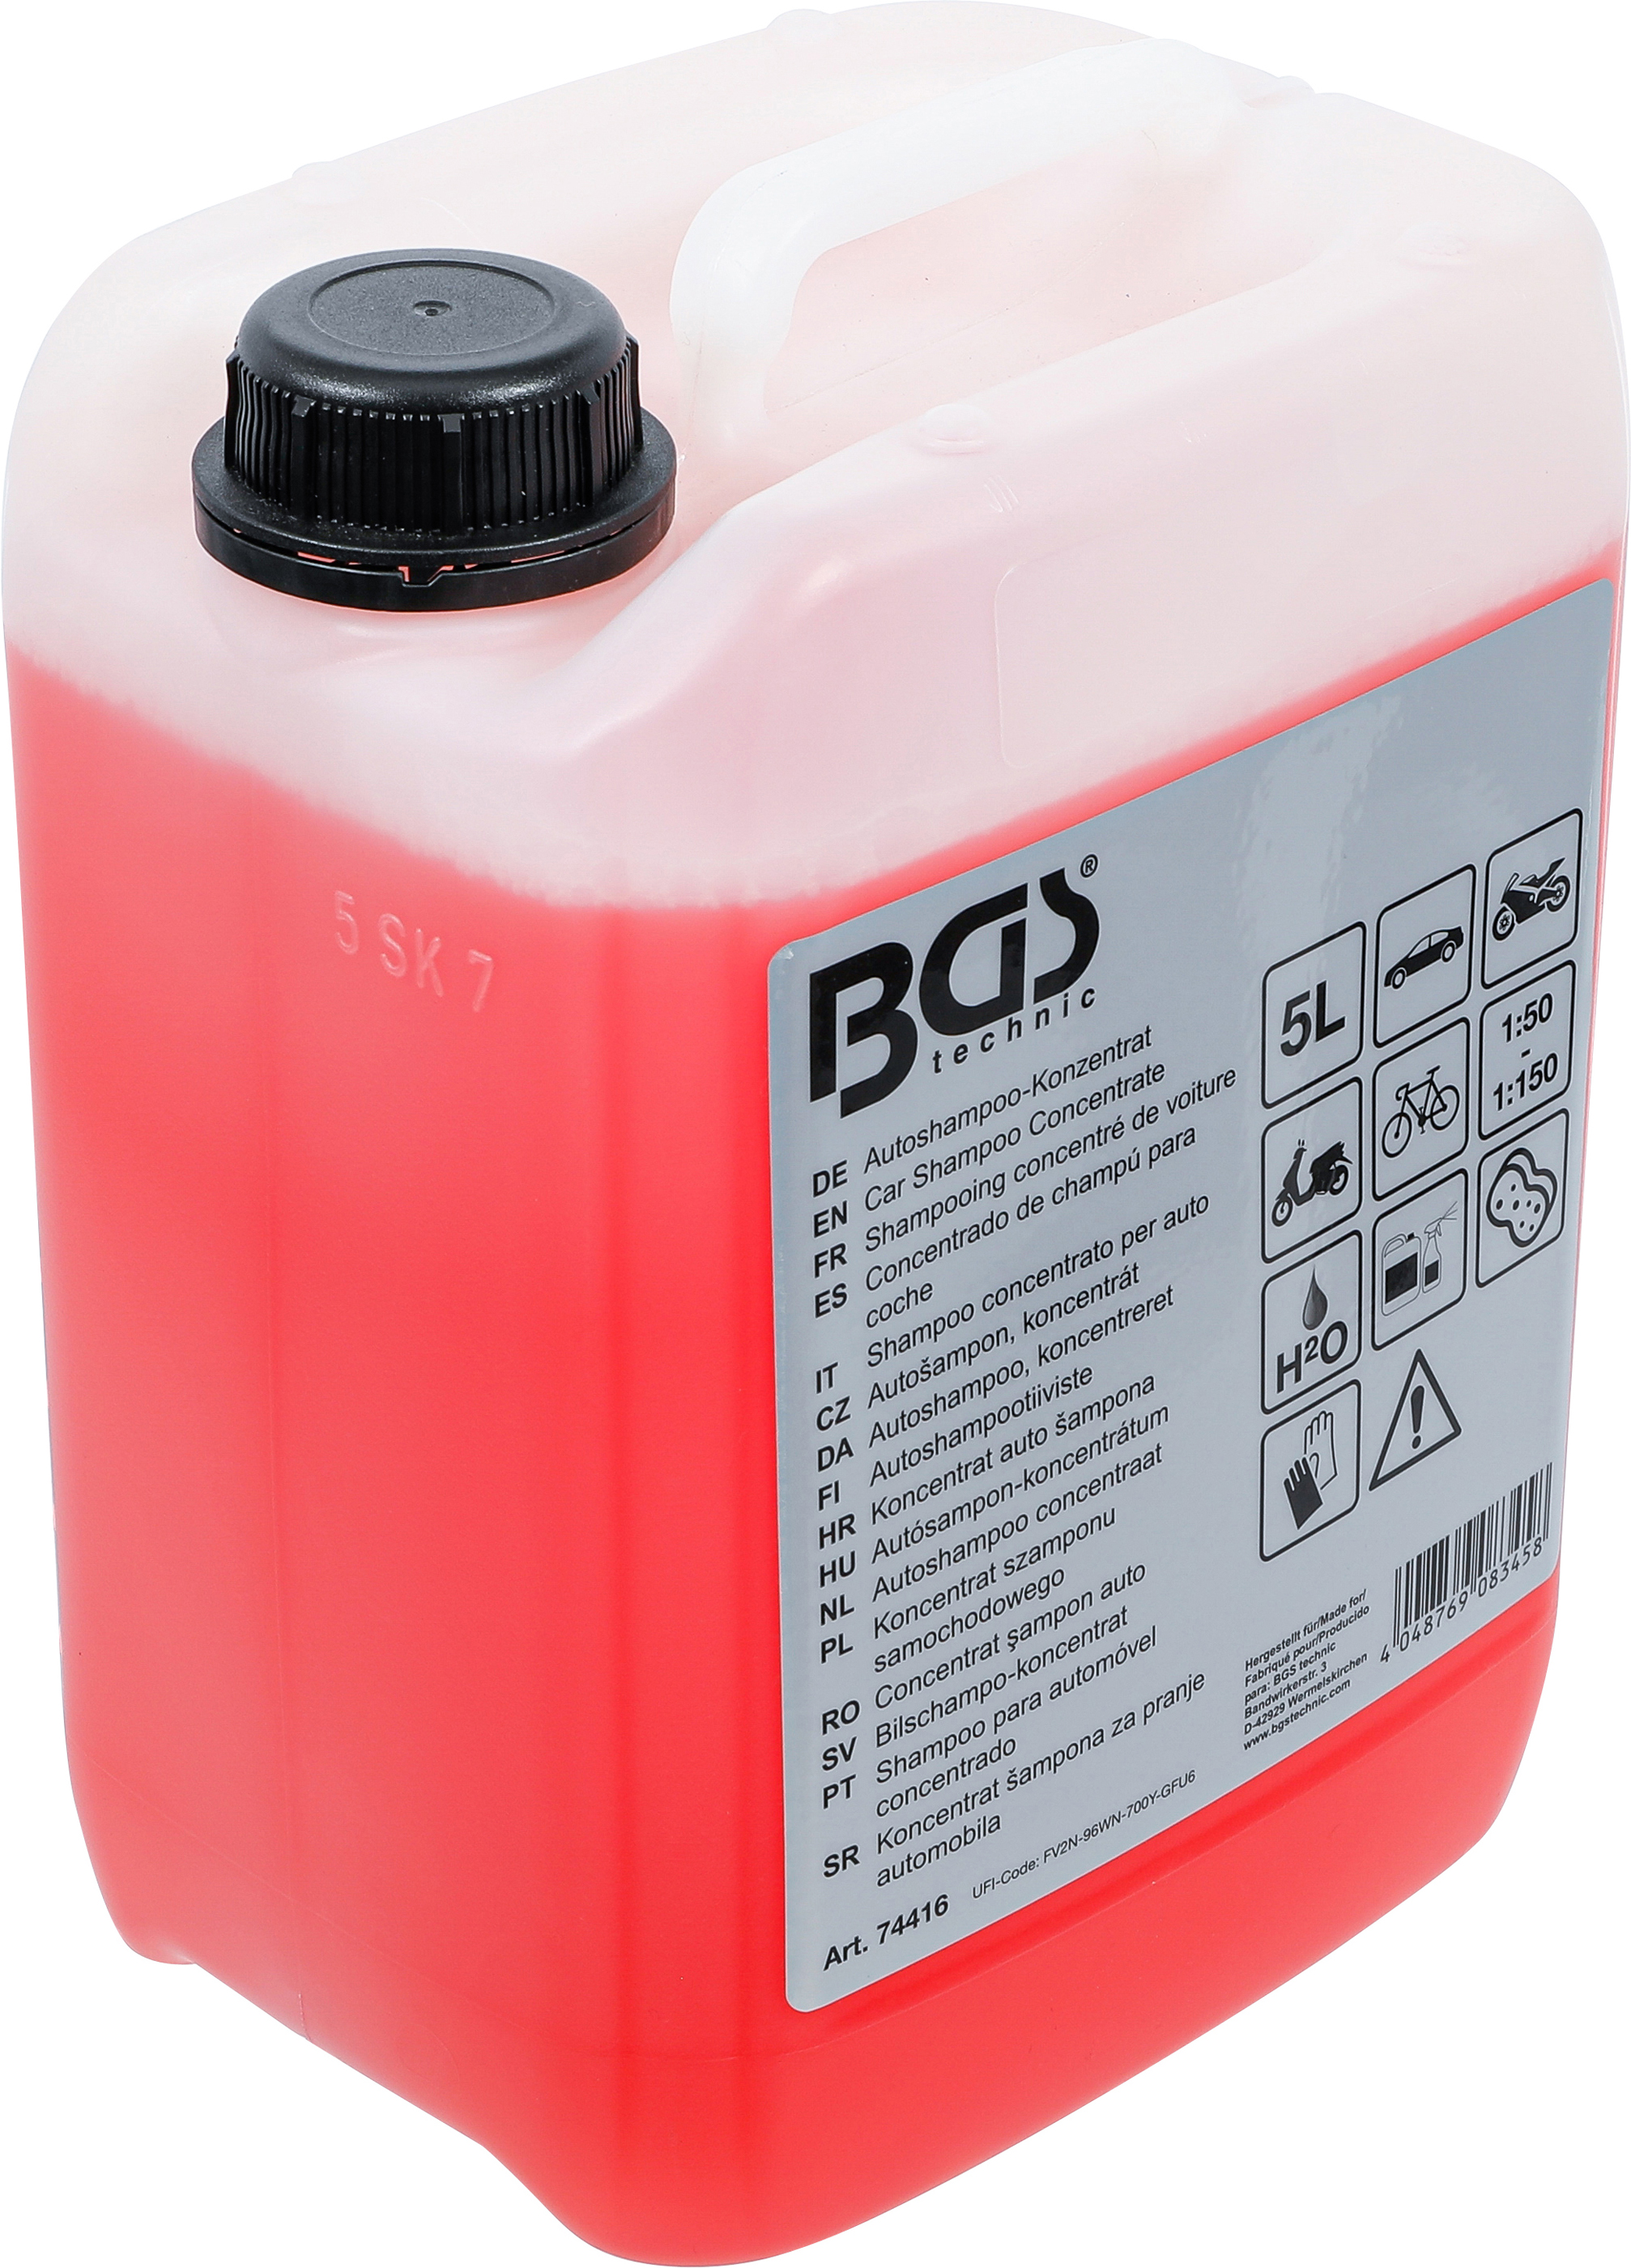 BGS Autoshampoo-Konzentrat | rot | 5 l